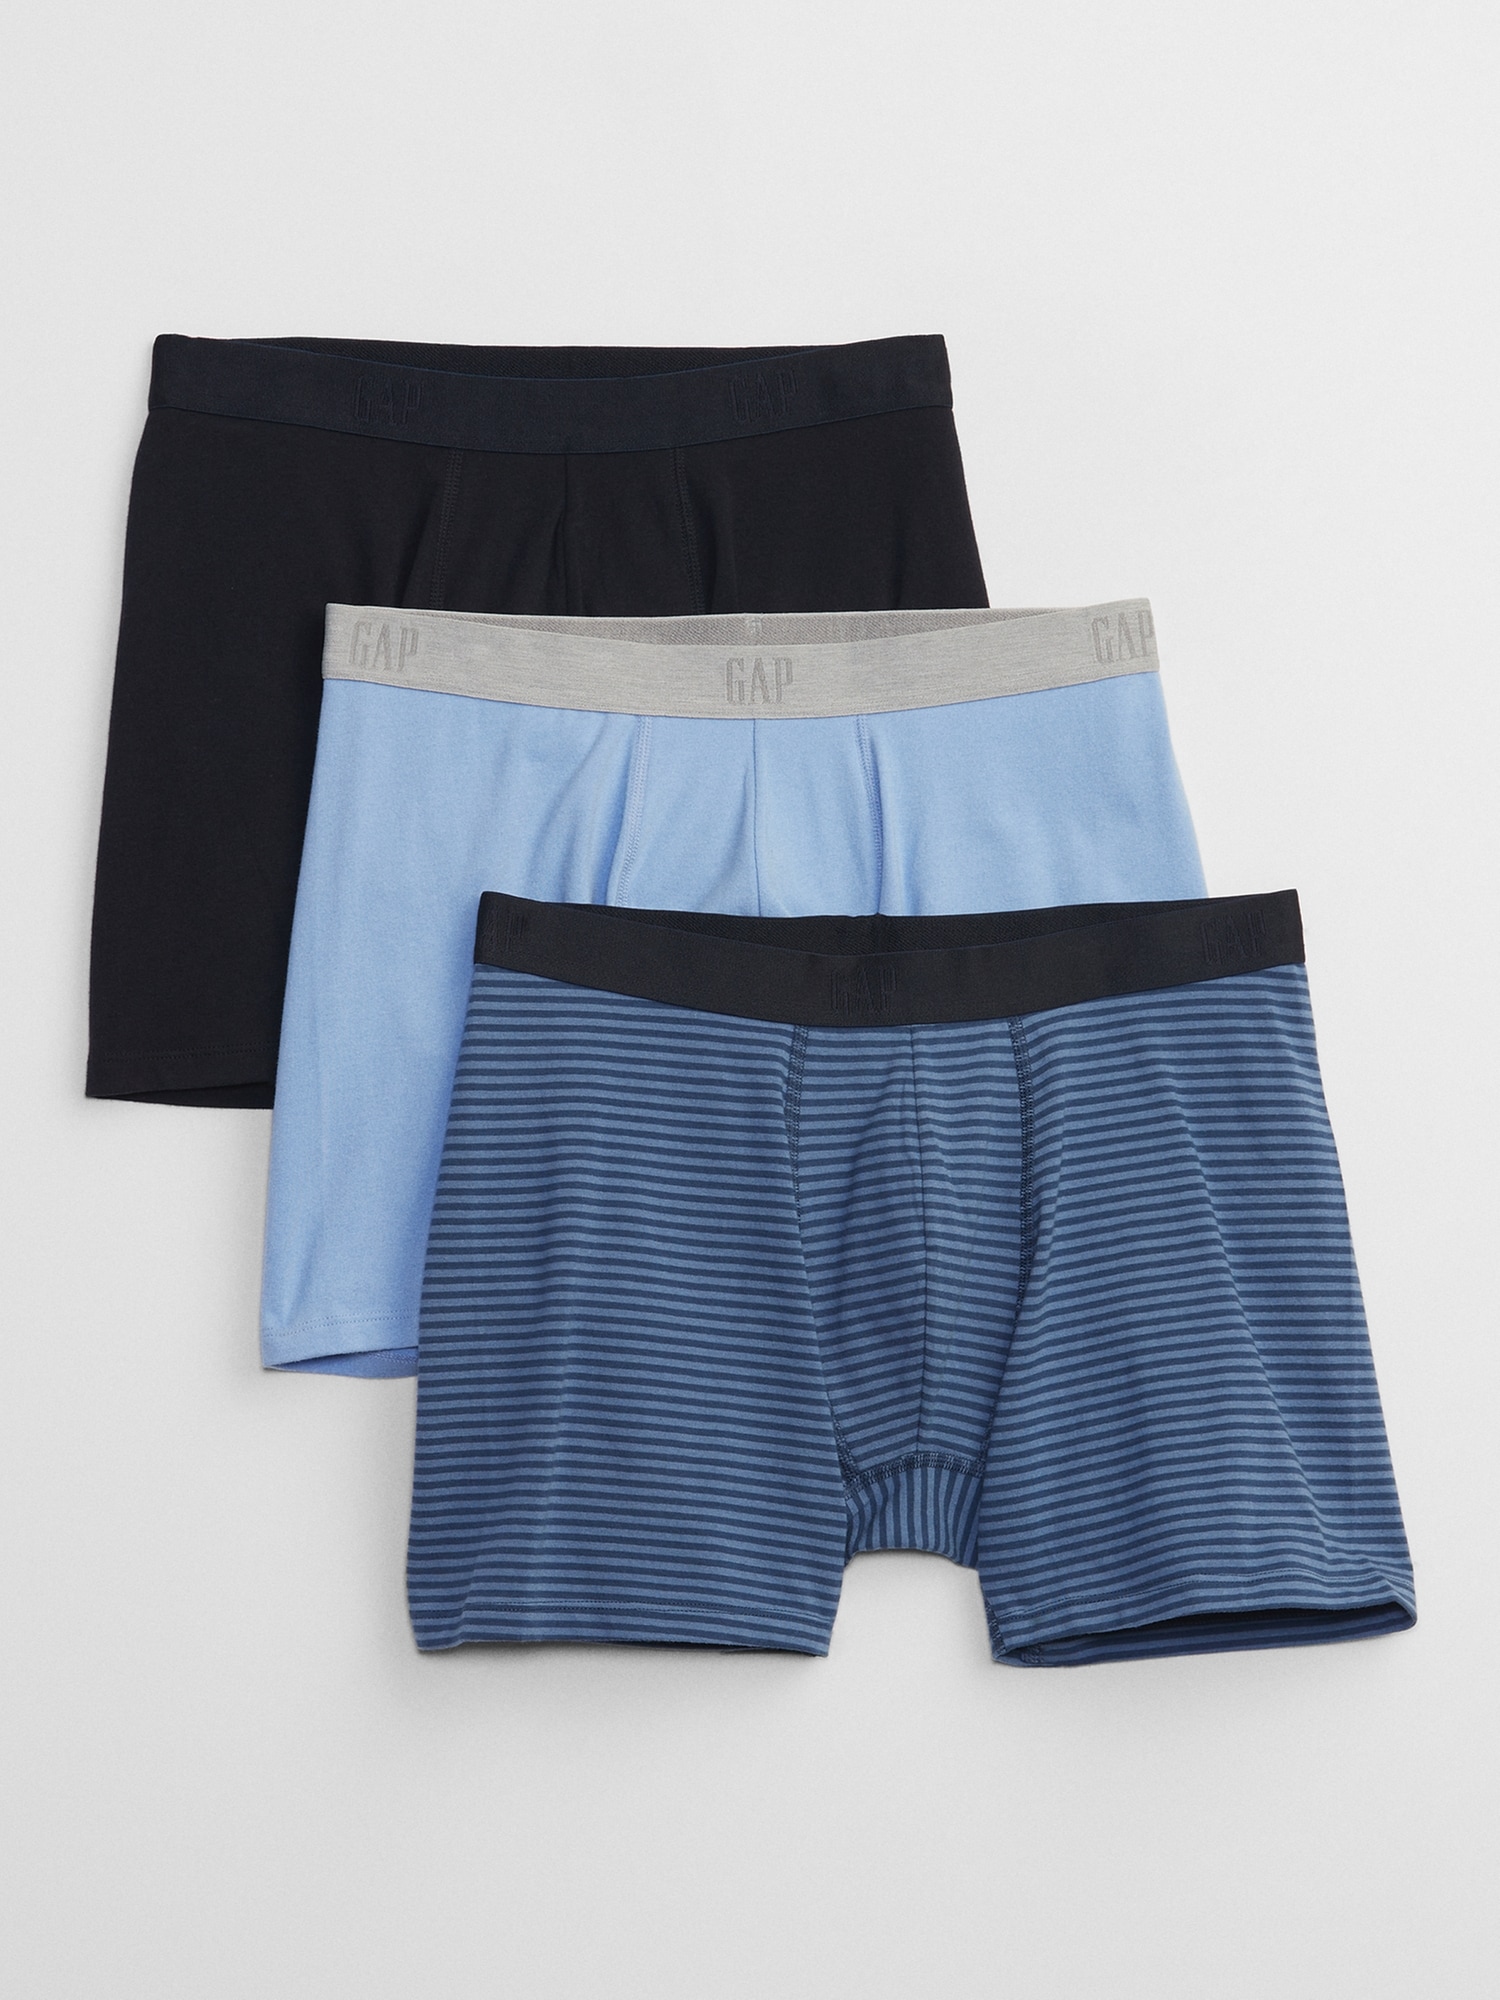 GAP Men's 3-Pack Boxer Brief Underpants Underwear, Olive Camo